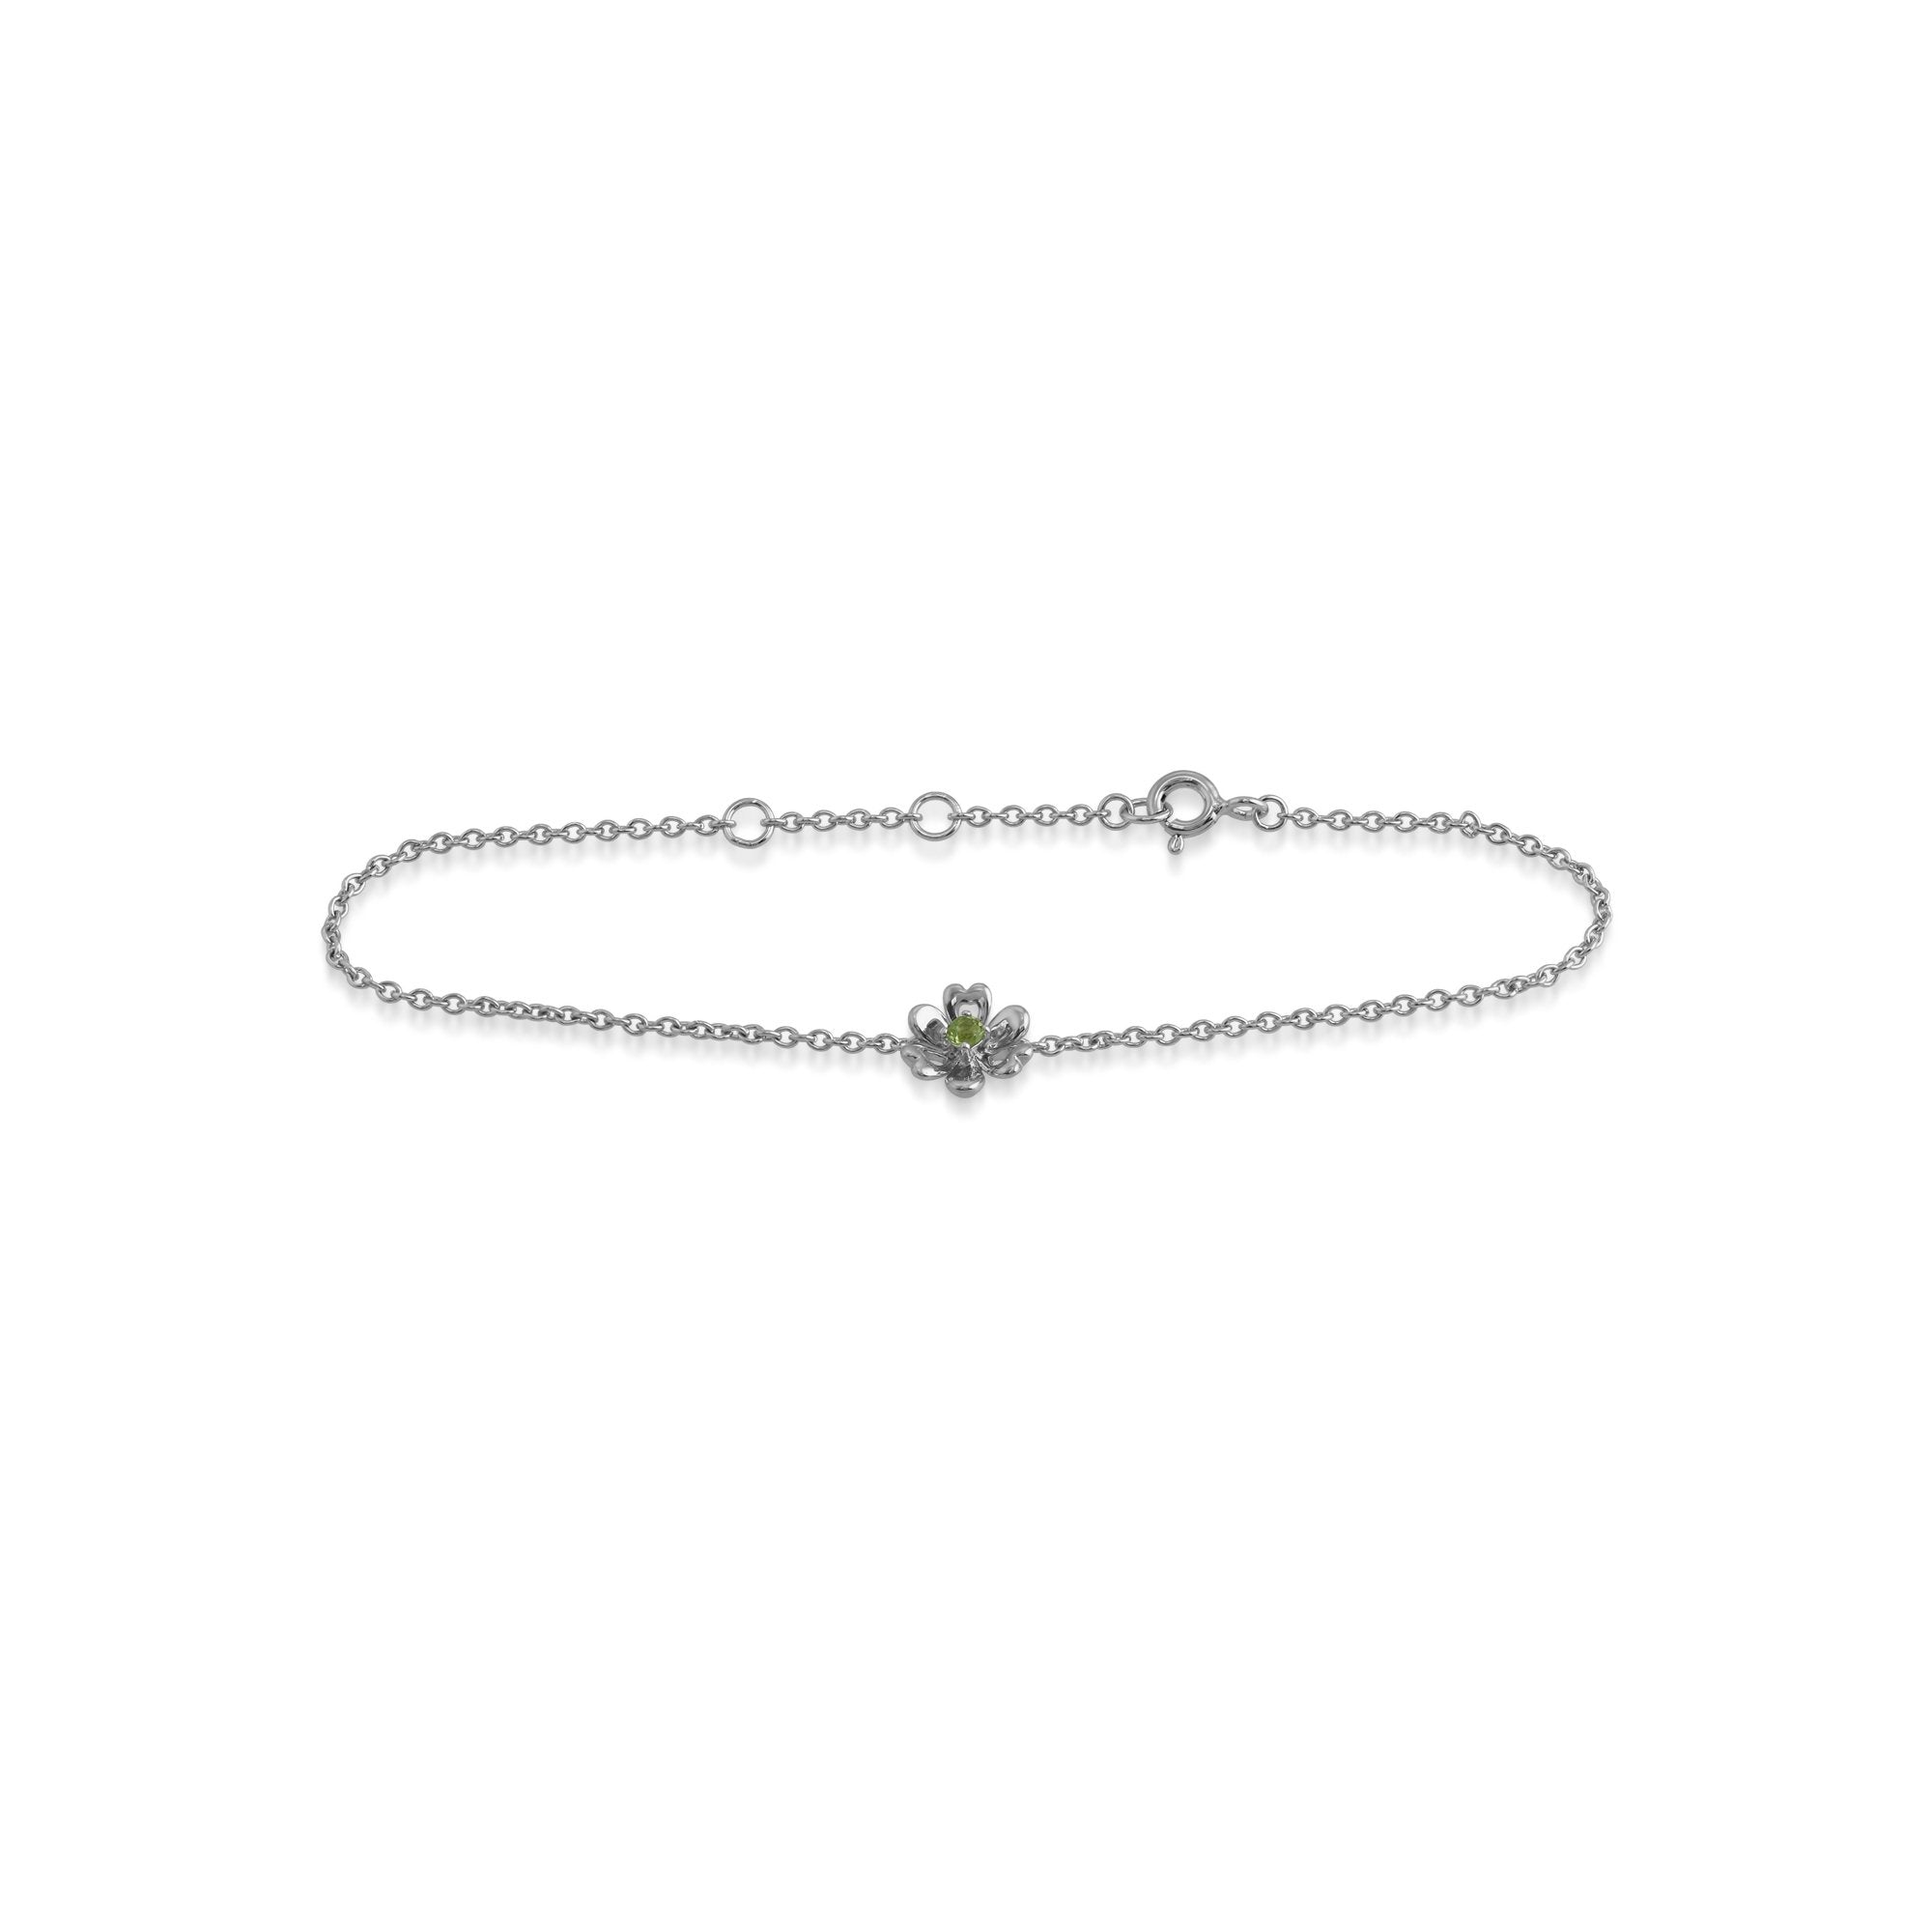 Floral Round Peridot Flower Single Stone Bracelet in 925 Sterling Silver